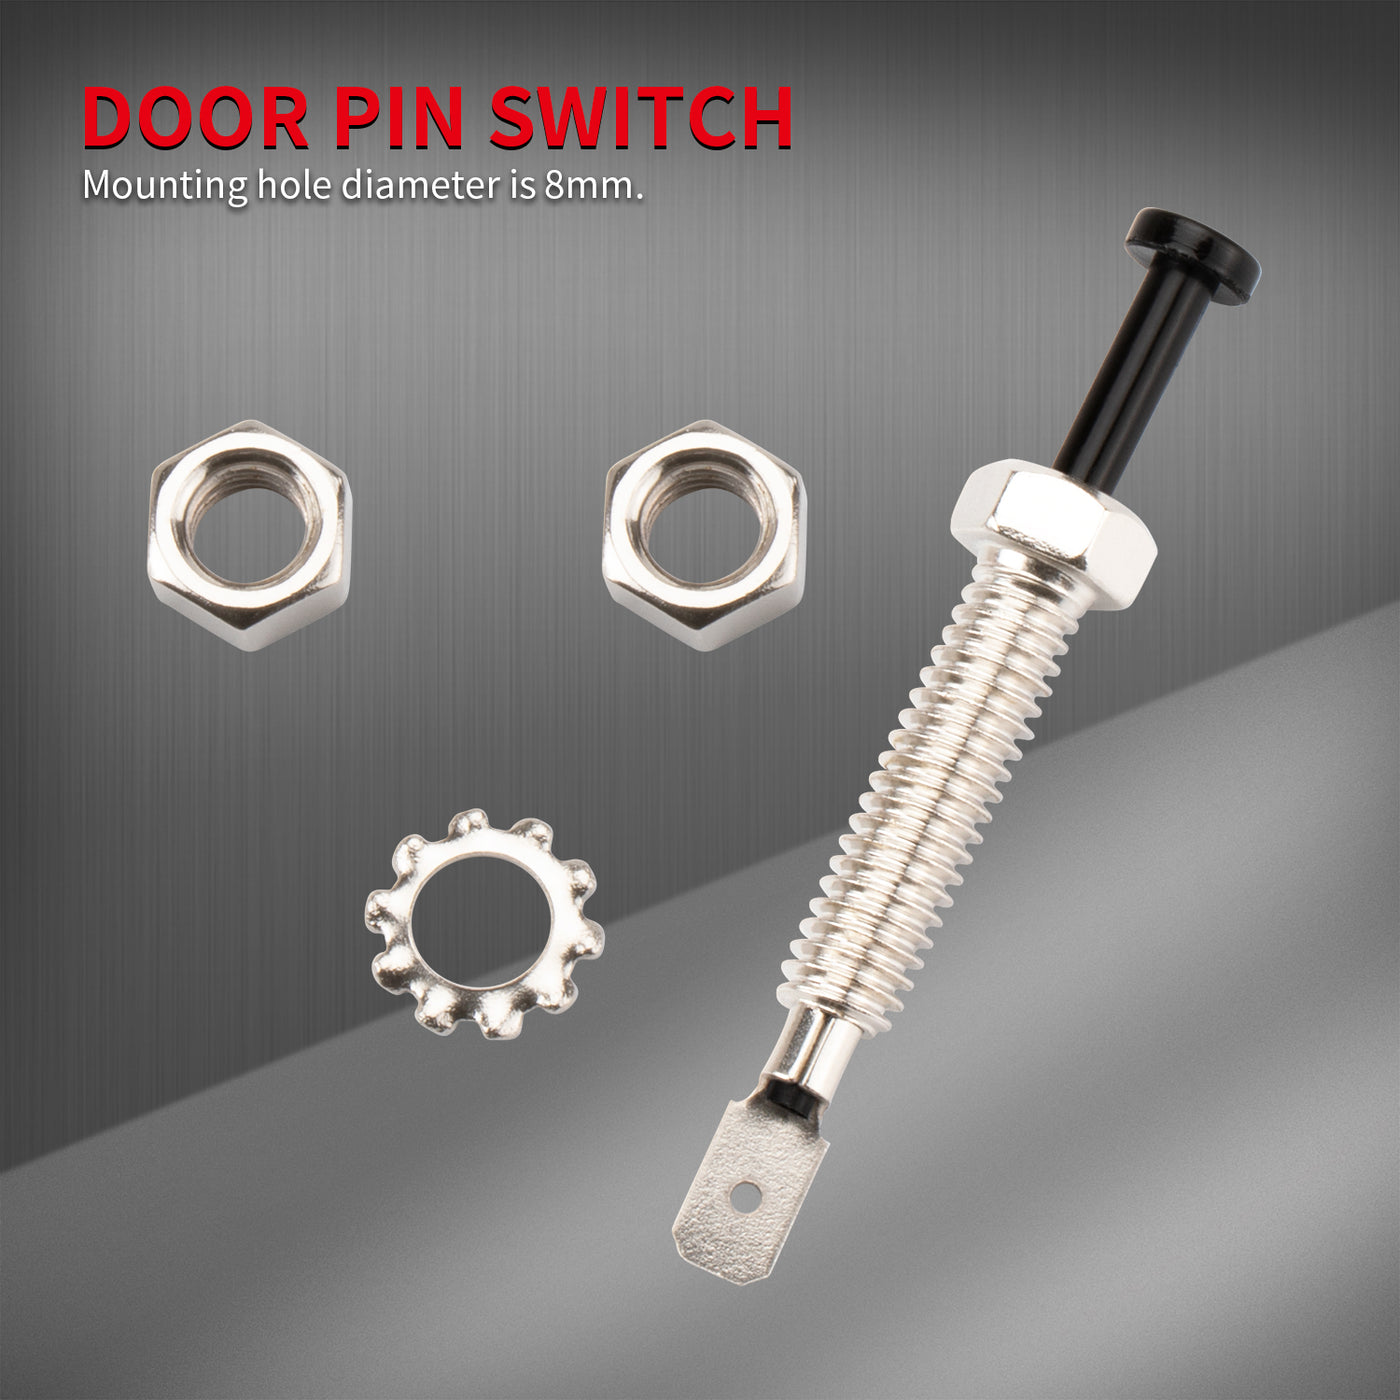 PIN-7 Door Pin Switch